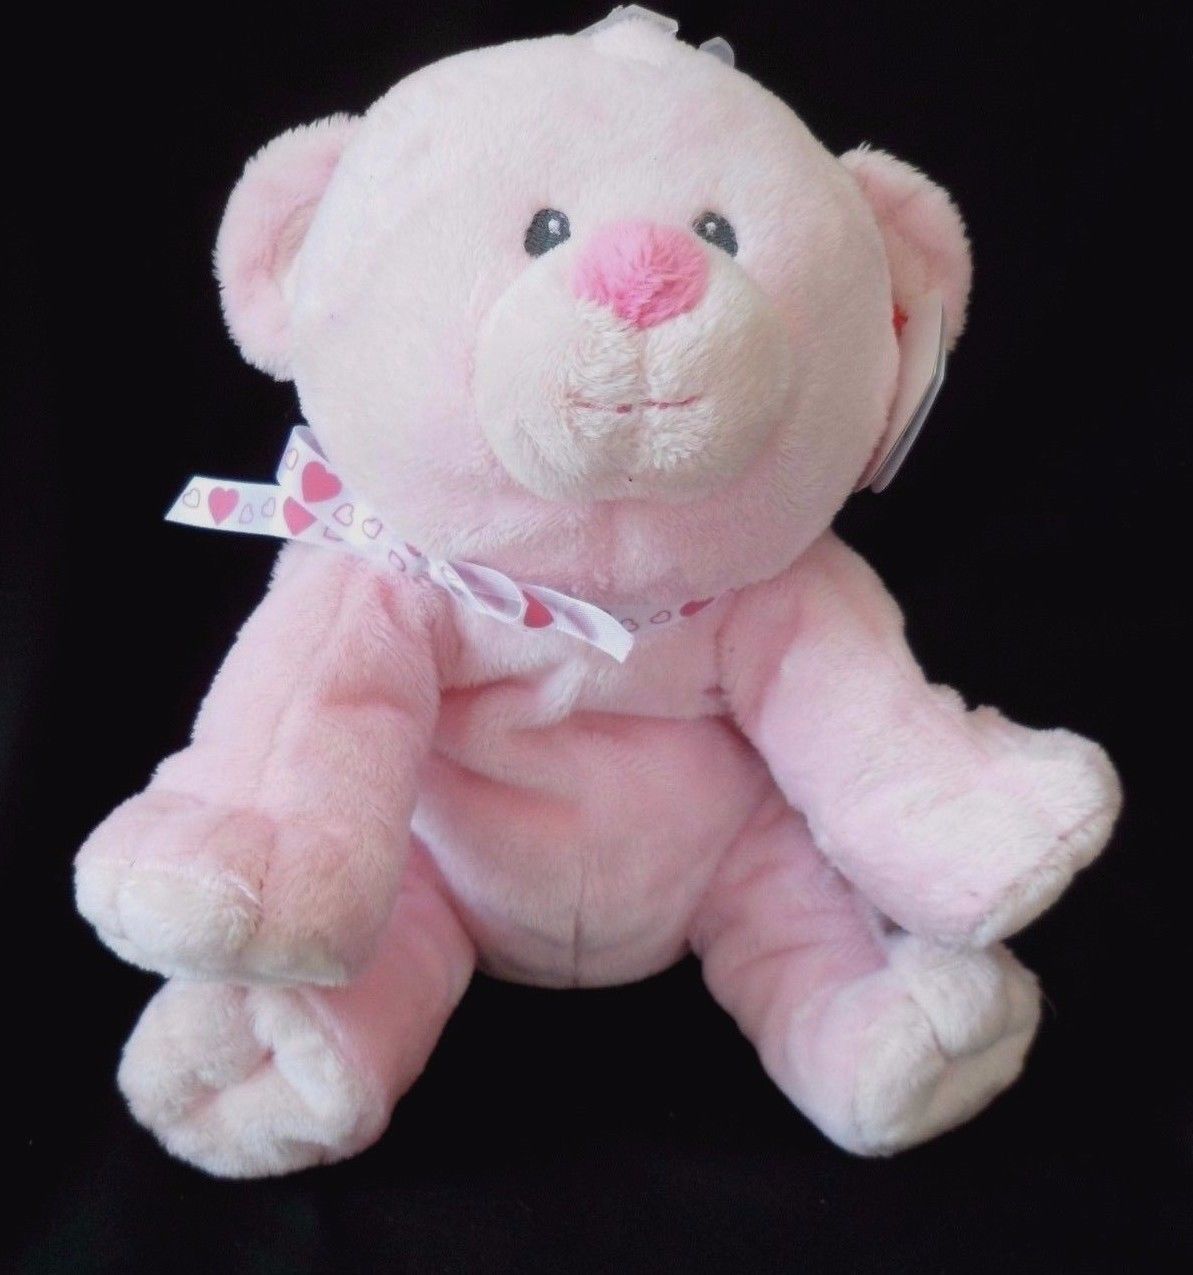 TY AMORE Pluffies Pink Teddy Bear Plush Stuffed Animal  NEW  2012" - $18.57